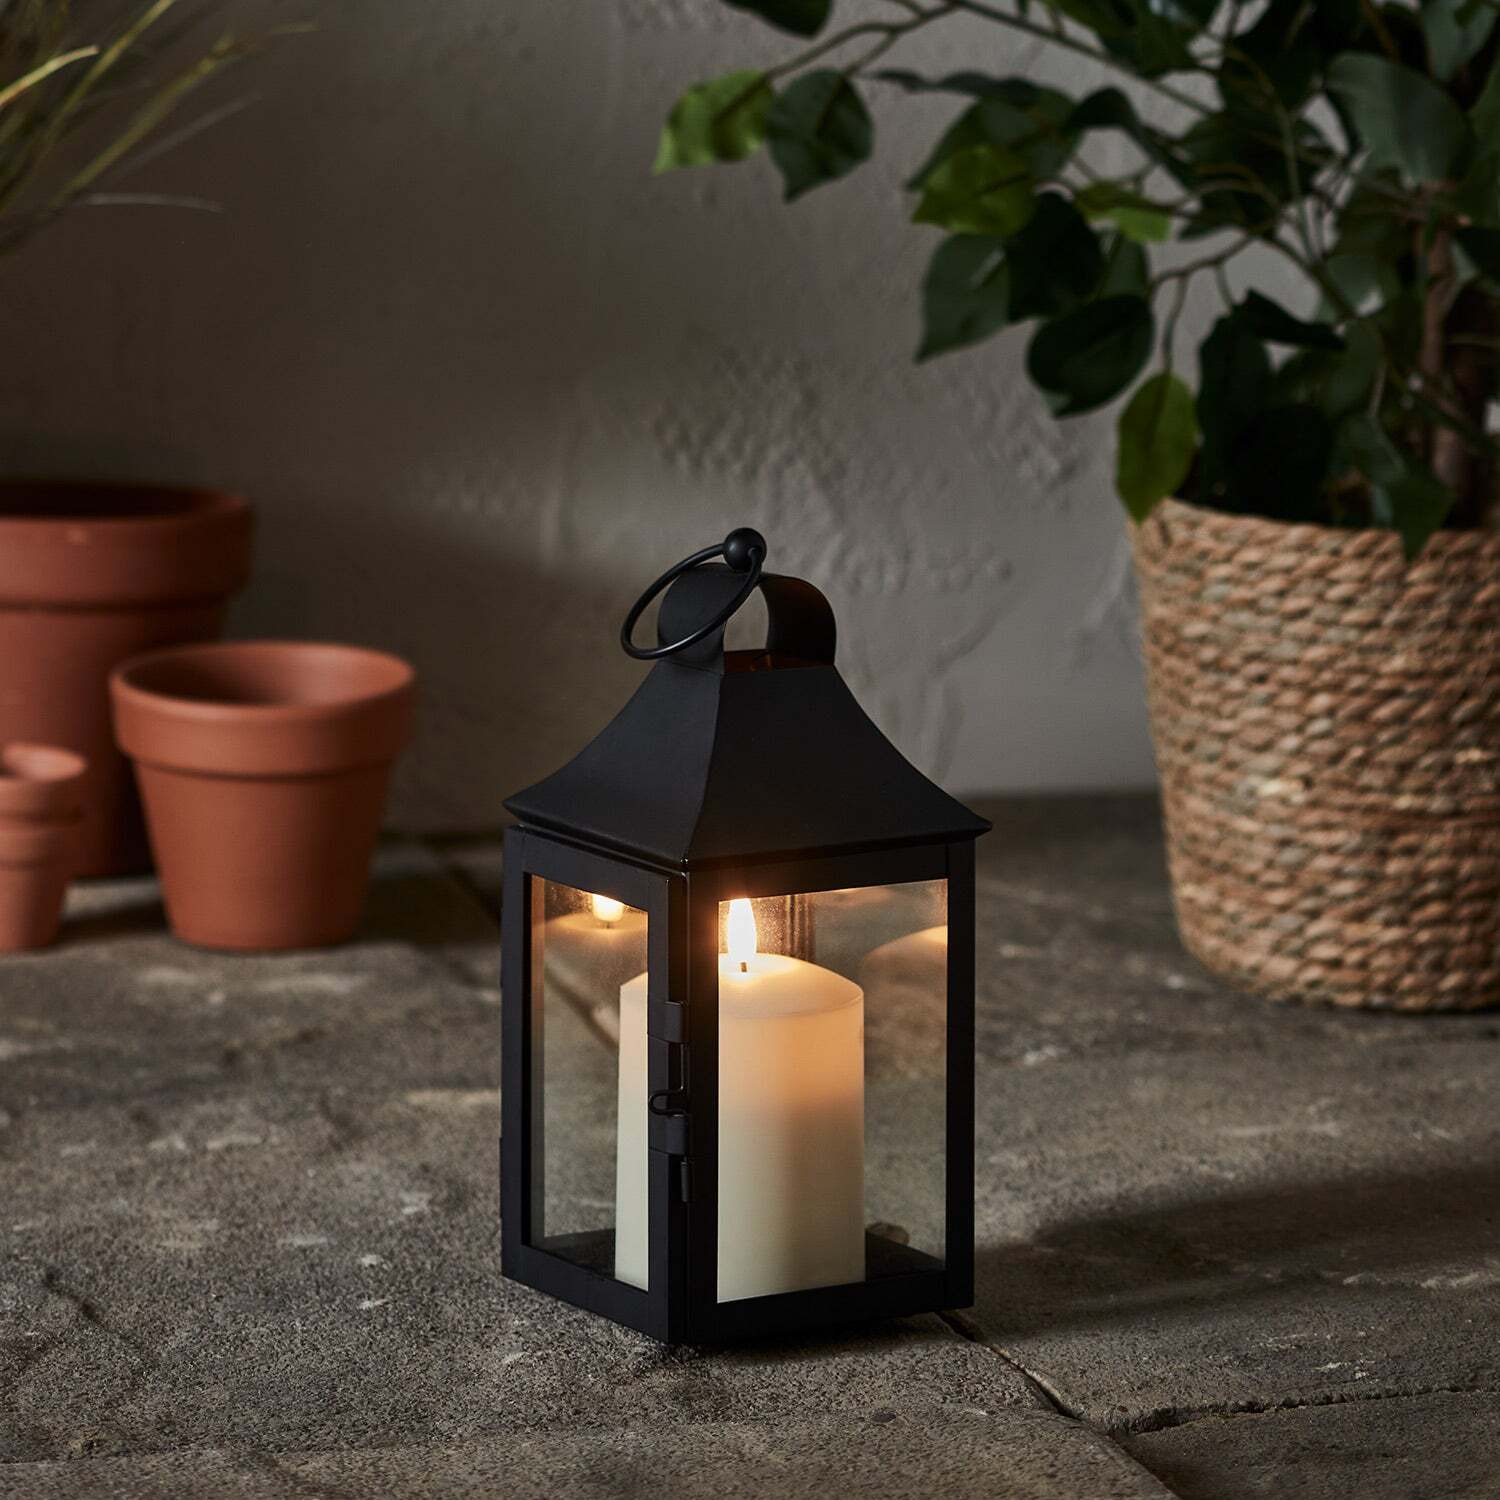 25cm Albury Black Garden Lantern with TruGlow® Candle - image 1